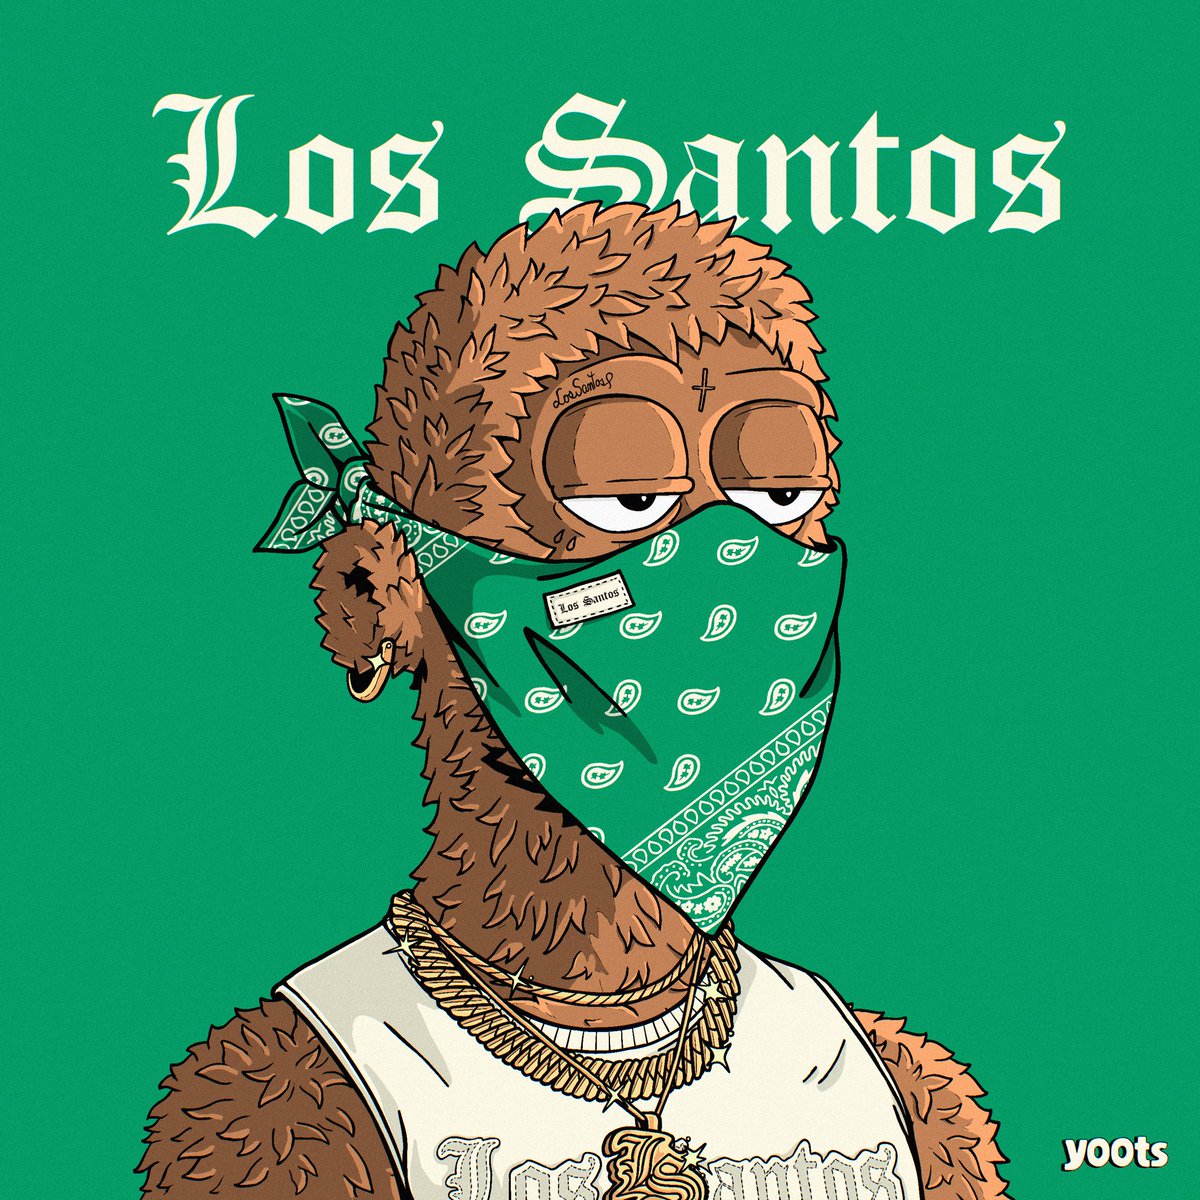 @y00tsNFT daily posts - day 5 'Los Santos' y00ts Edition we continue cooking daily, put your y00ts ID below